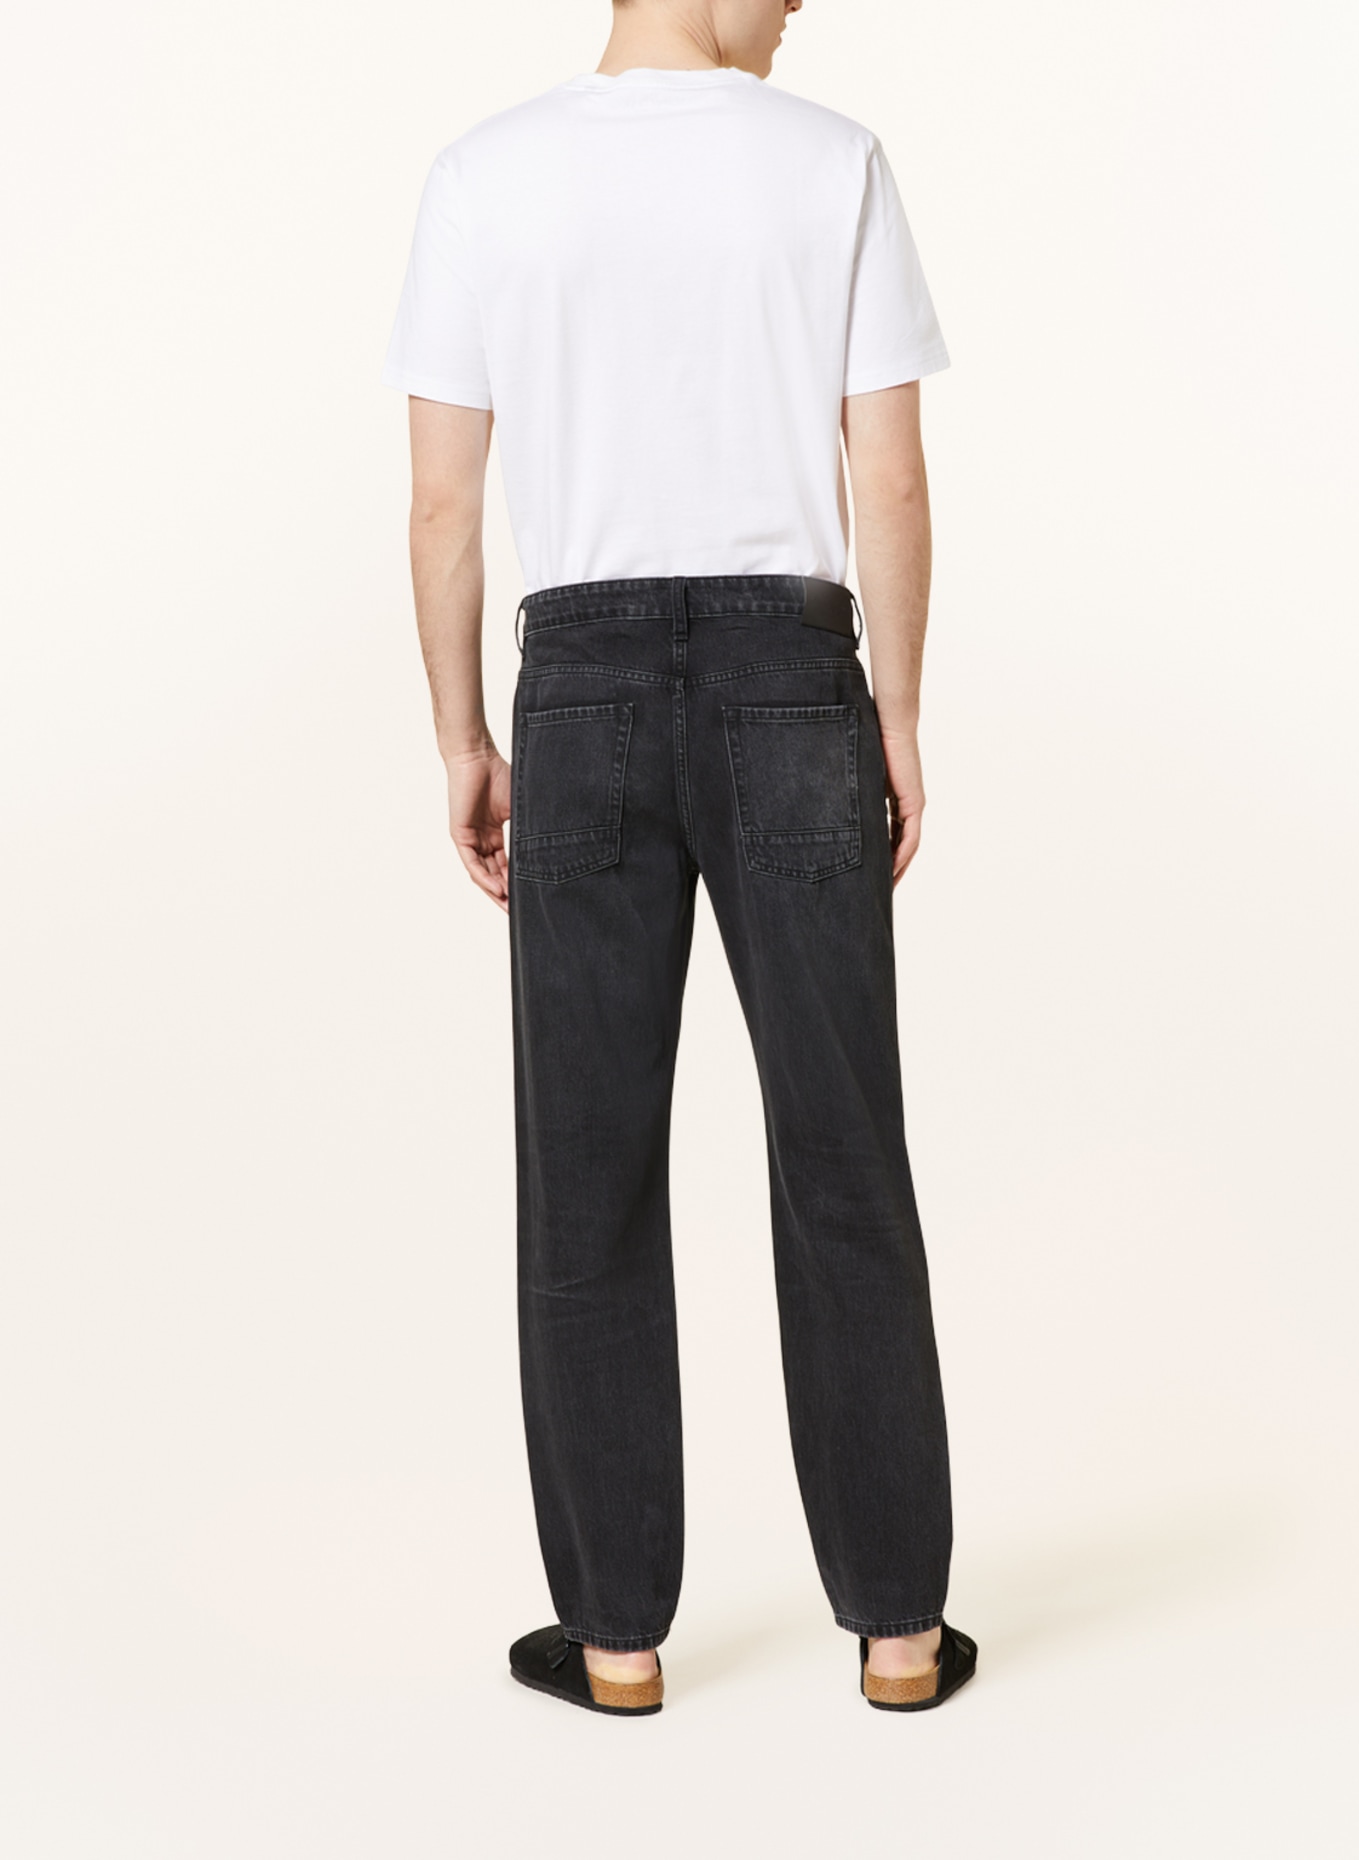 Marc O'Polo Jeans tapered fit, Color: 030 Black od black wash (Image 3)